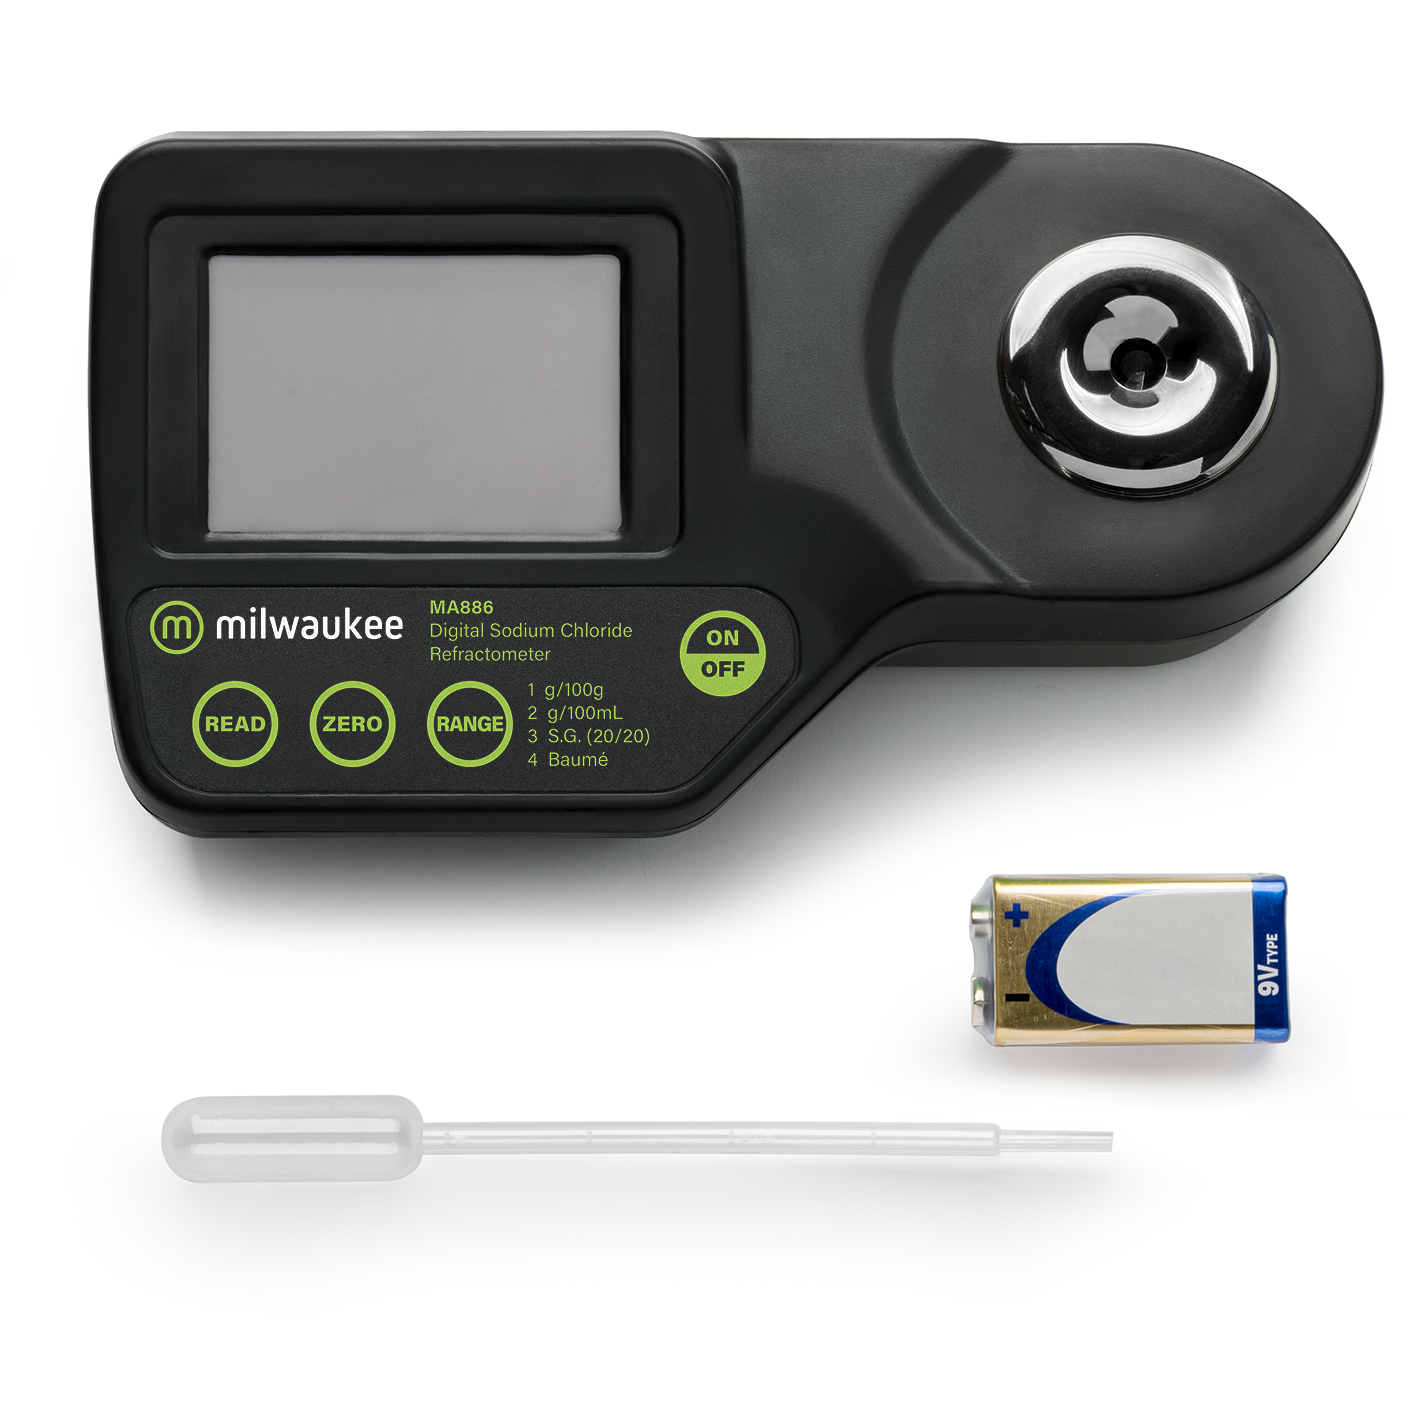 Milwaukee MA886 Digital Refractometer to Determine Sodium Chloride in Food